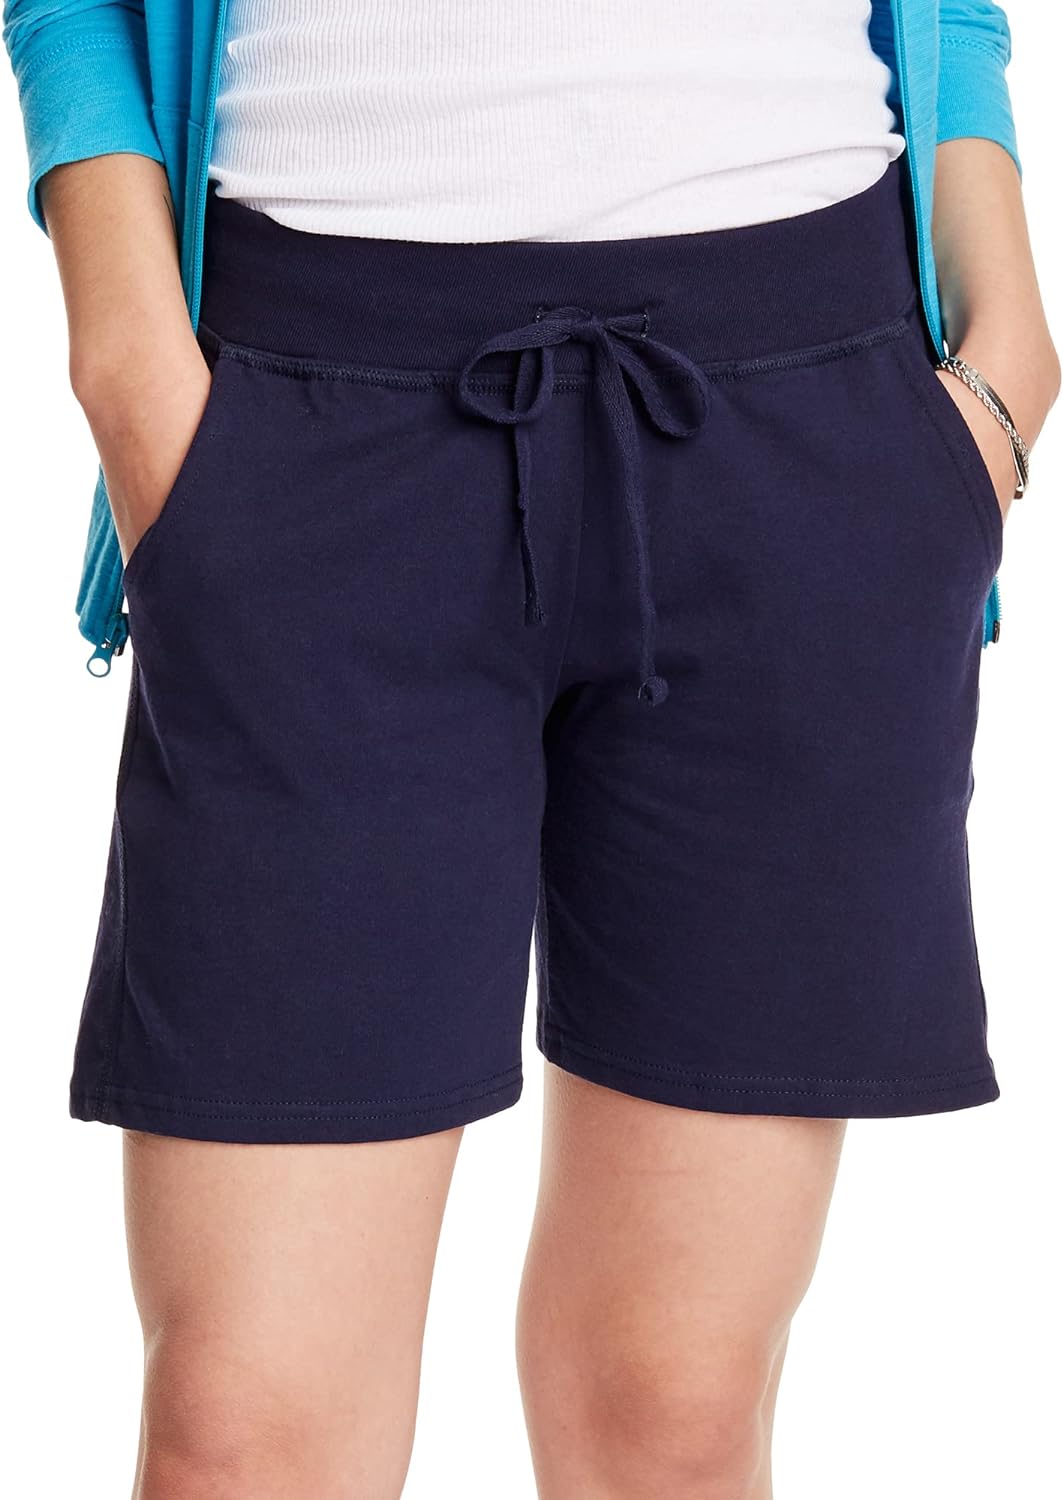 Hanes Women’s Jersey Pocket Shorts, Drawstring Cotton Jersey Shorts, 7″ Inseam